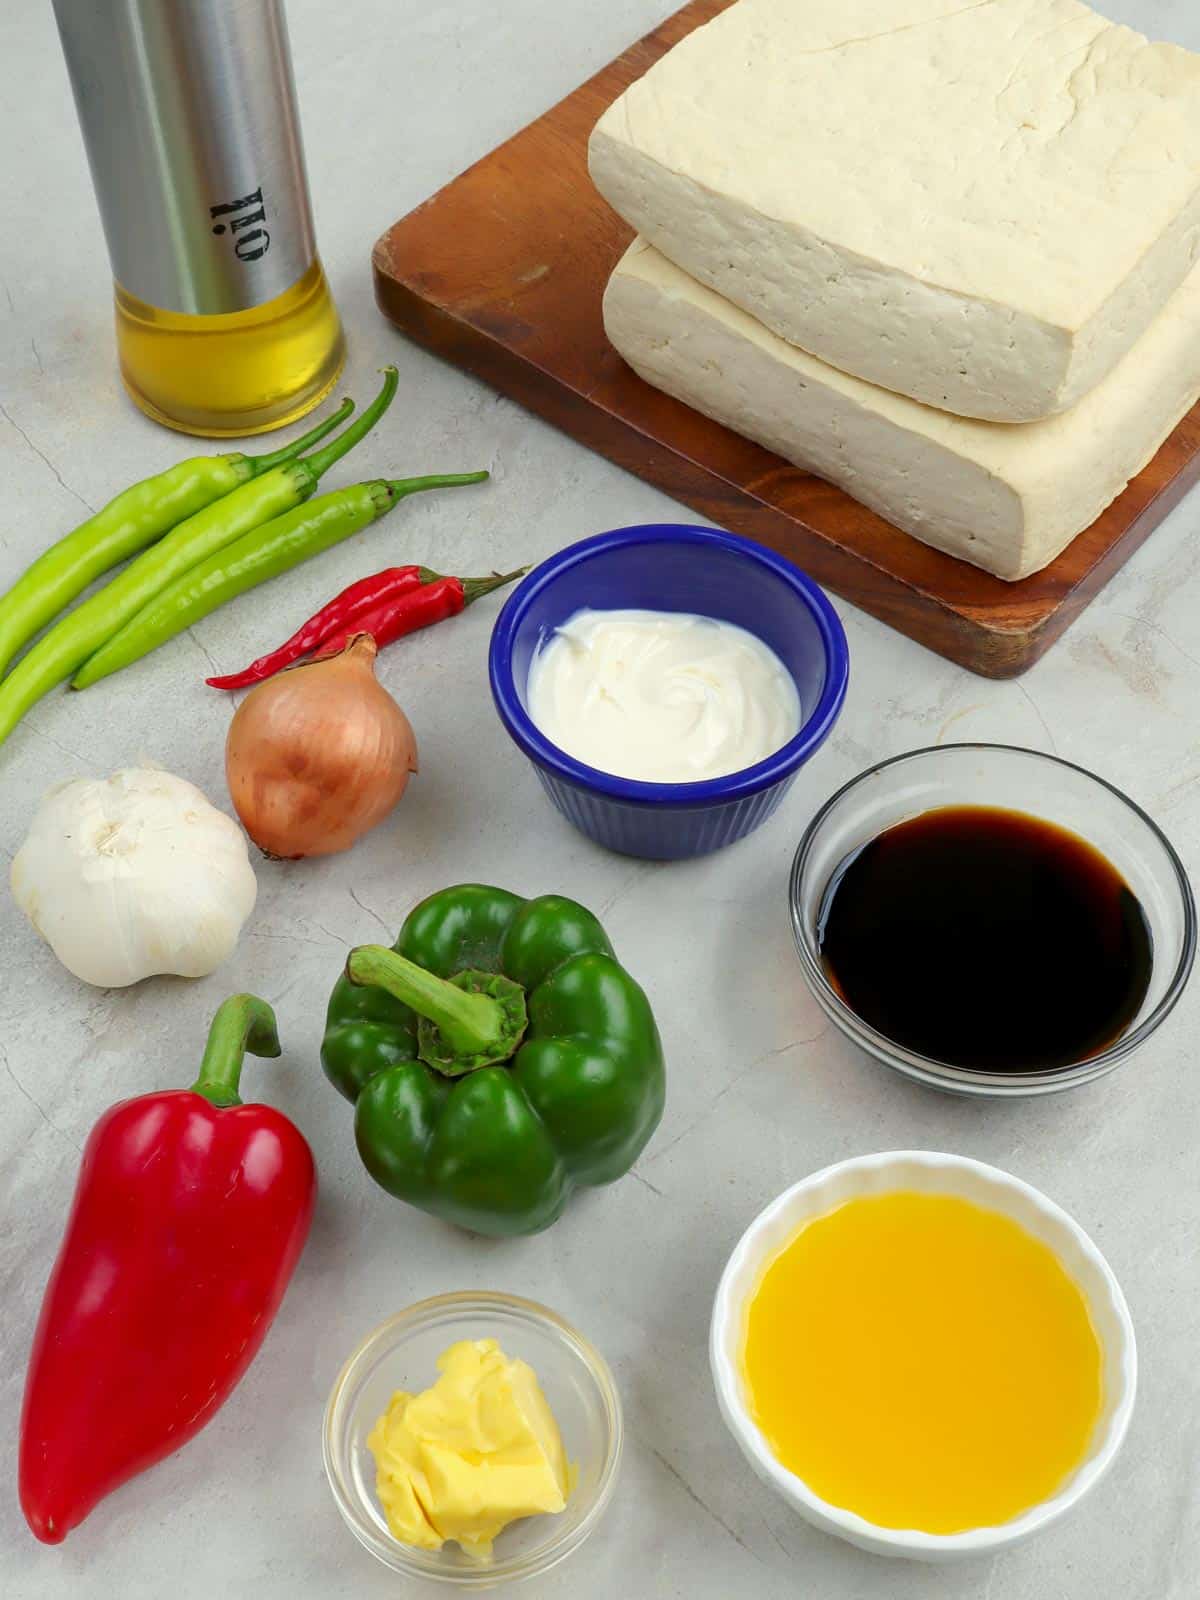 tofu blocks, bell peppers, onion, garlic, calamansi juice, Knorr seasoning, butter, chili pepper,   mayonnaise in bowls